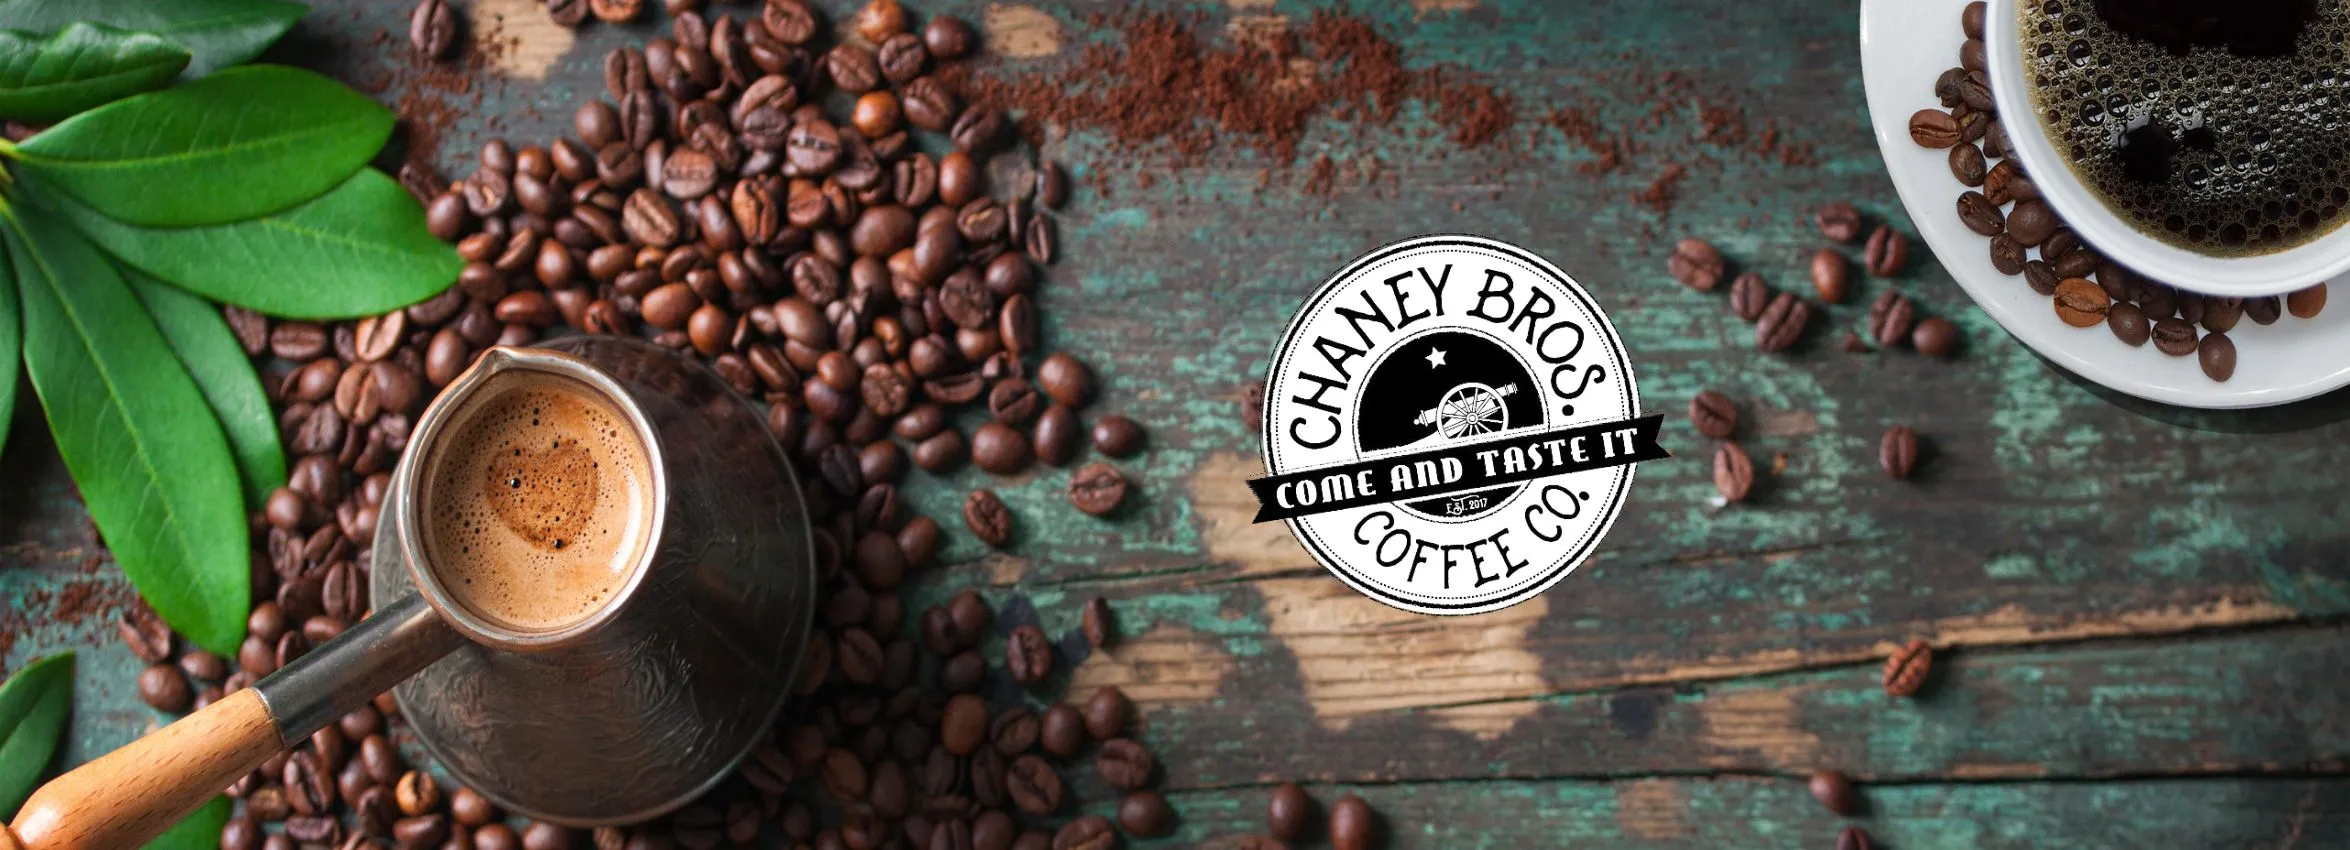 Chaney-Bros-Coffee-Co_Desktop_ET